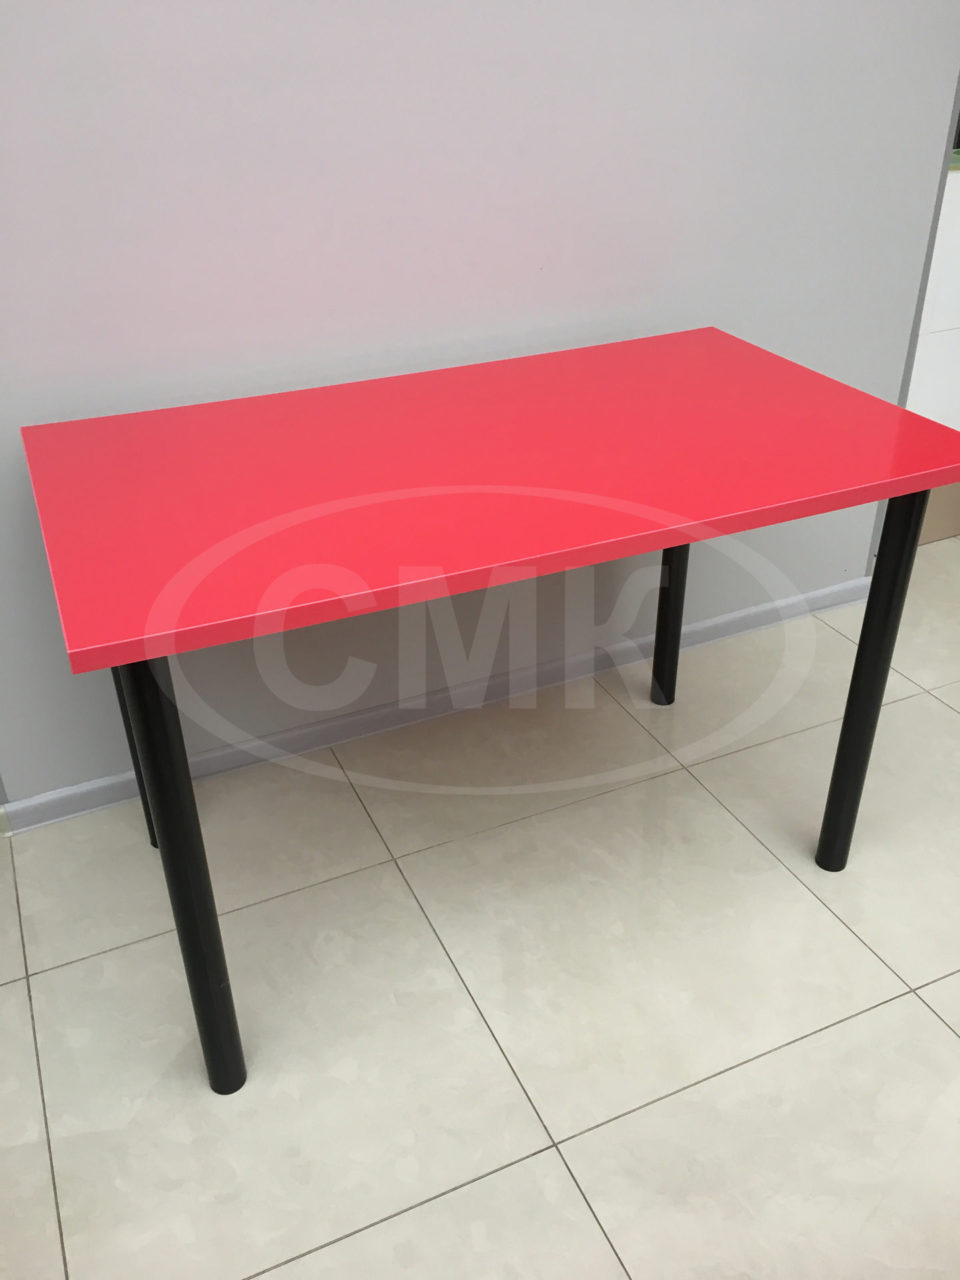 Стол на металлокаркассе (подстолье "стандарт" диаметр трубы 51 мм цвет черный, столешница пластик цвет глянец красный)